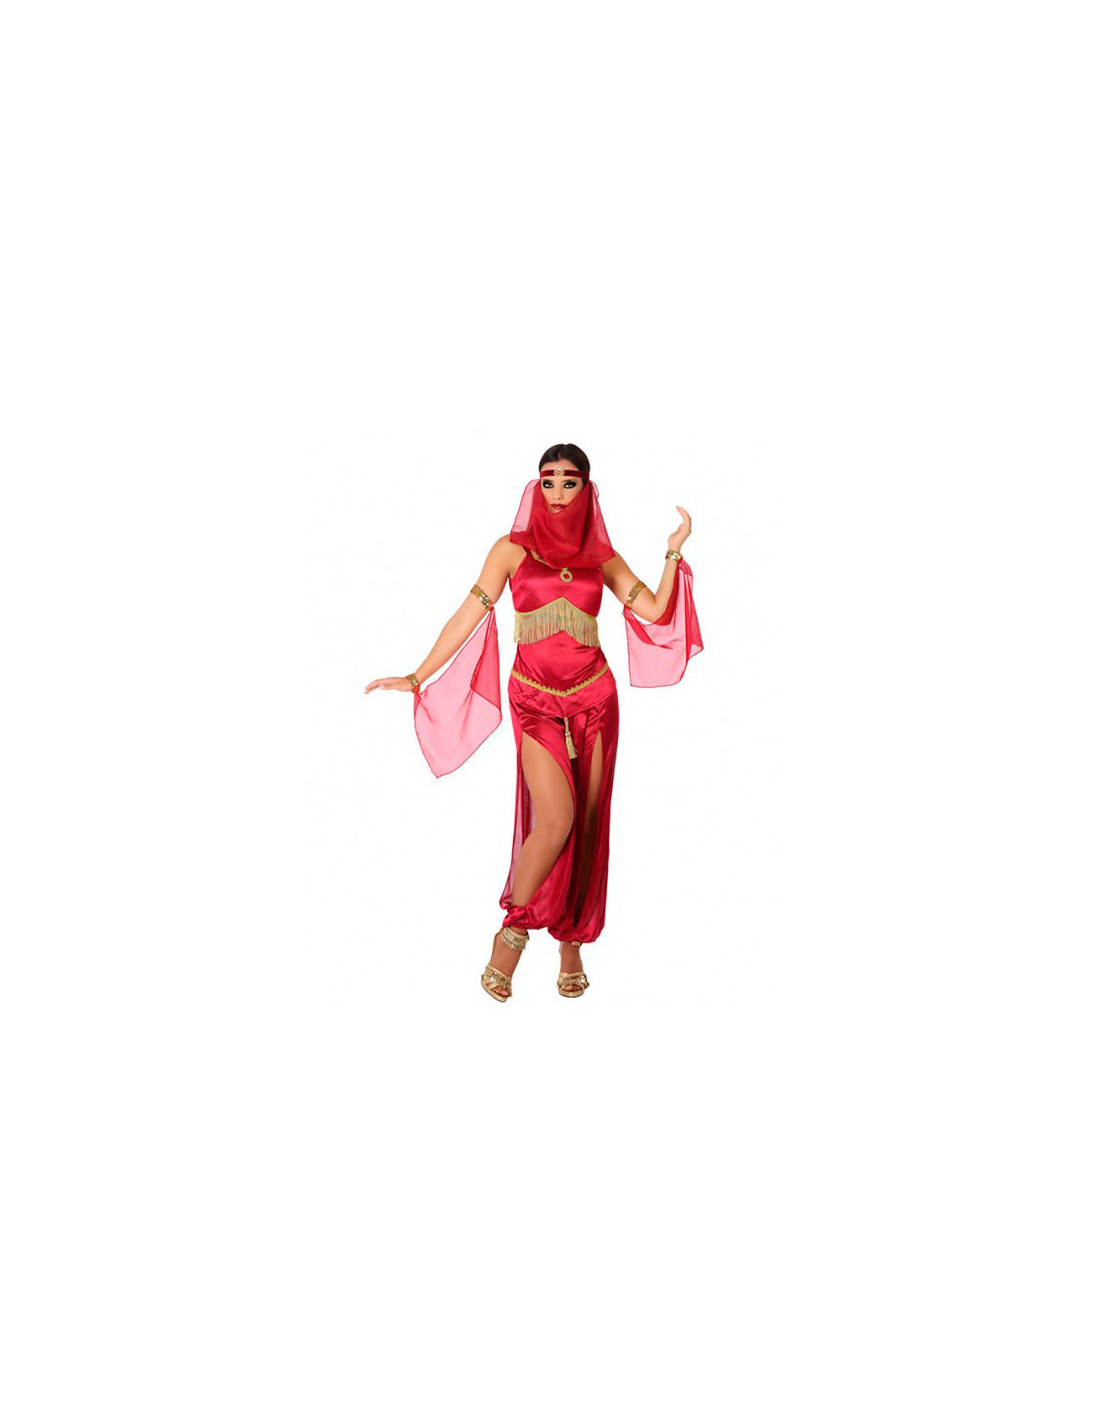 Disfraz de bailarina árabe roja para mujer - Comprar en Disfraces Bacanal